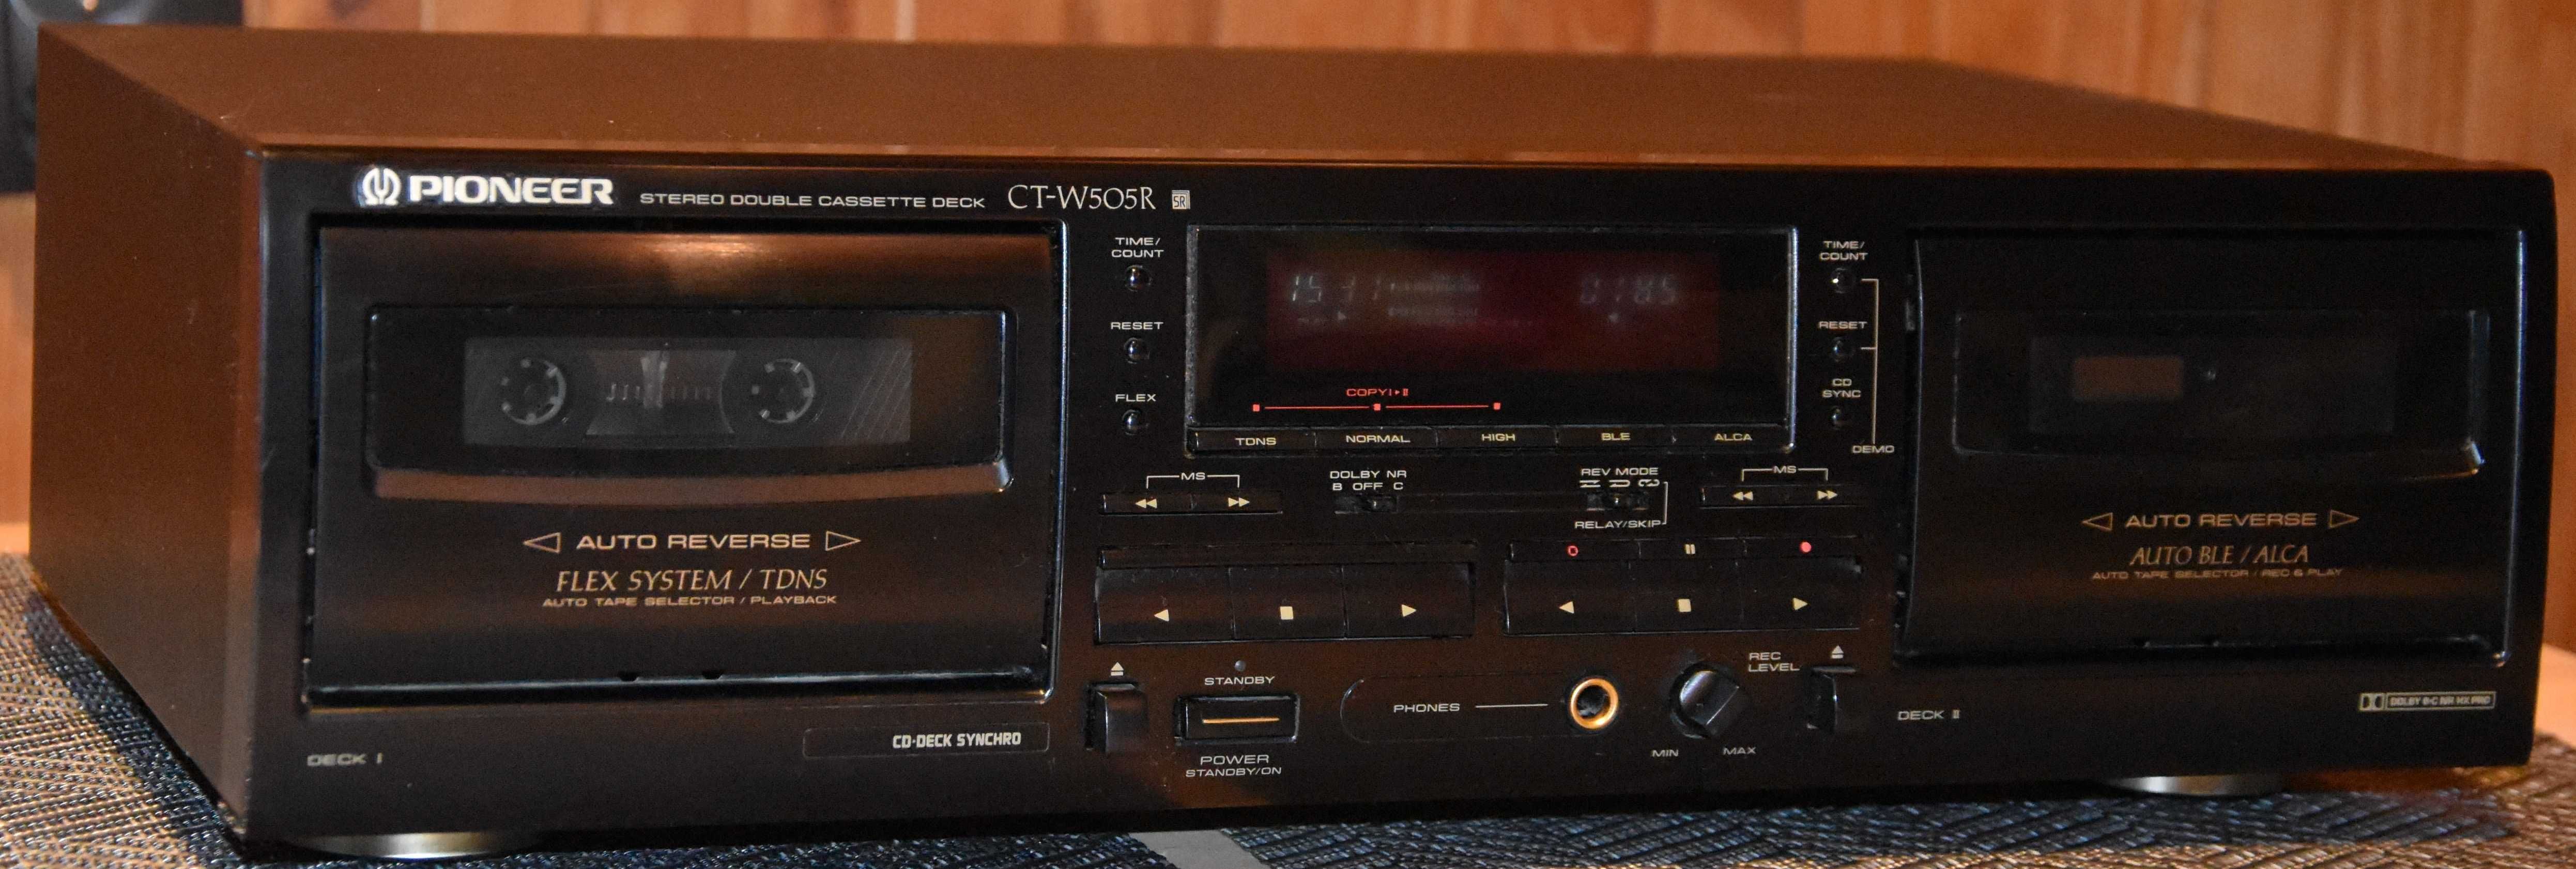 Pioneer CT-W505R Magnetofon dwukasetowy